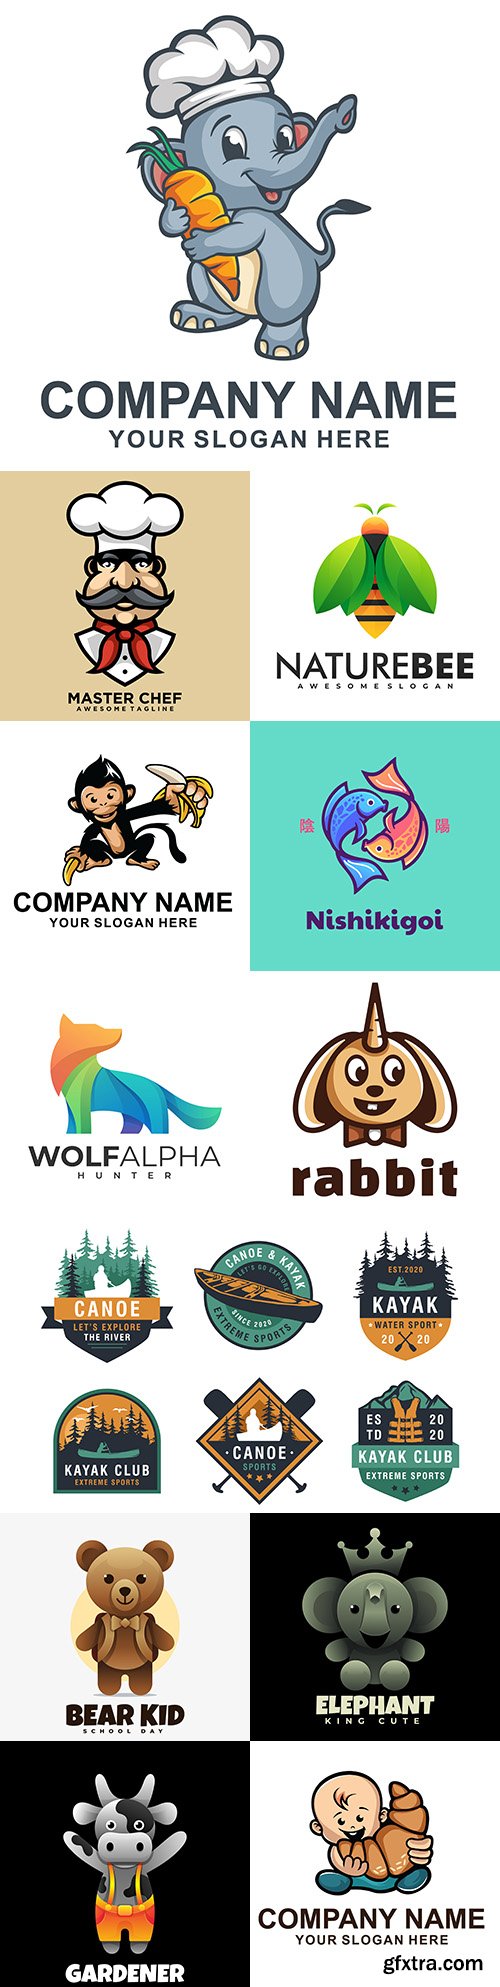 Brand name company business corporate logos design 16
